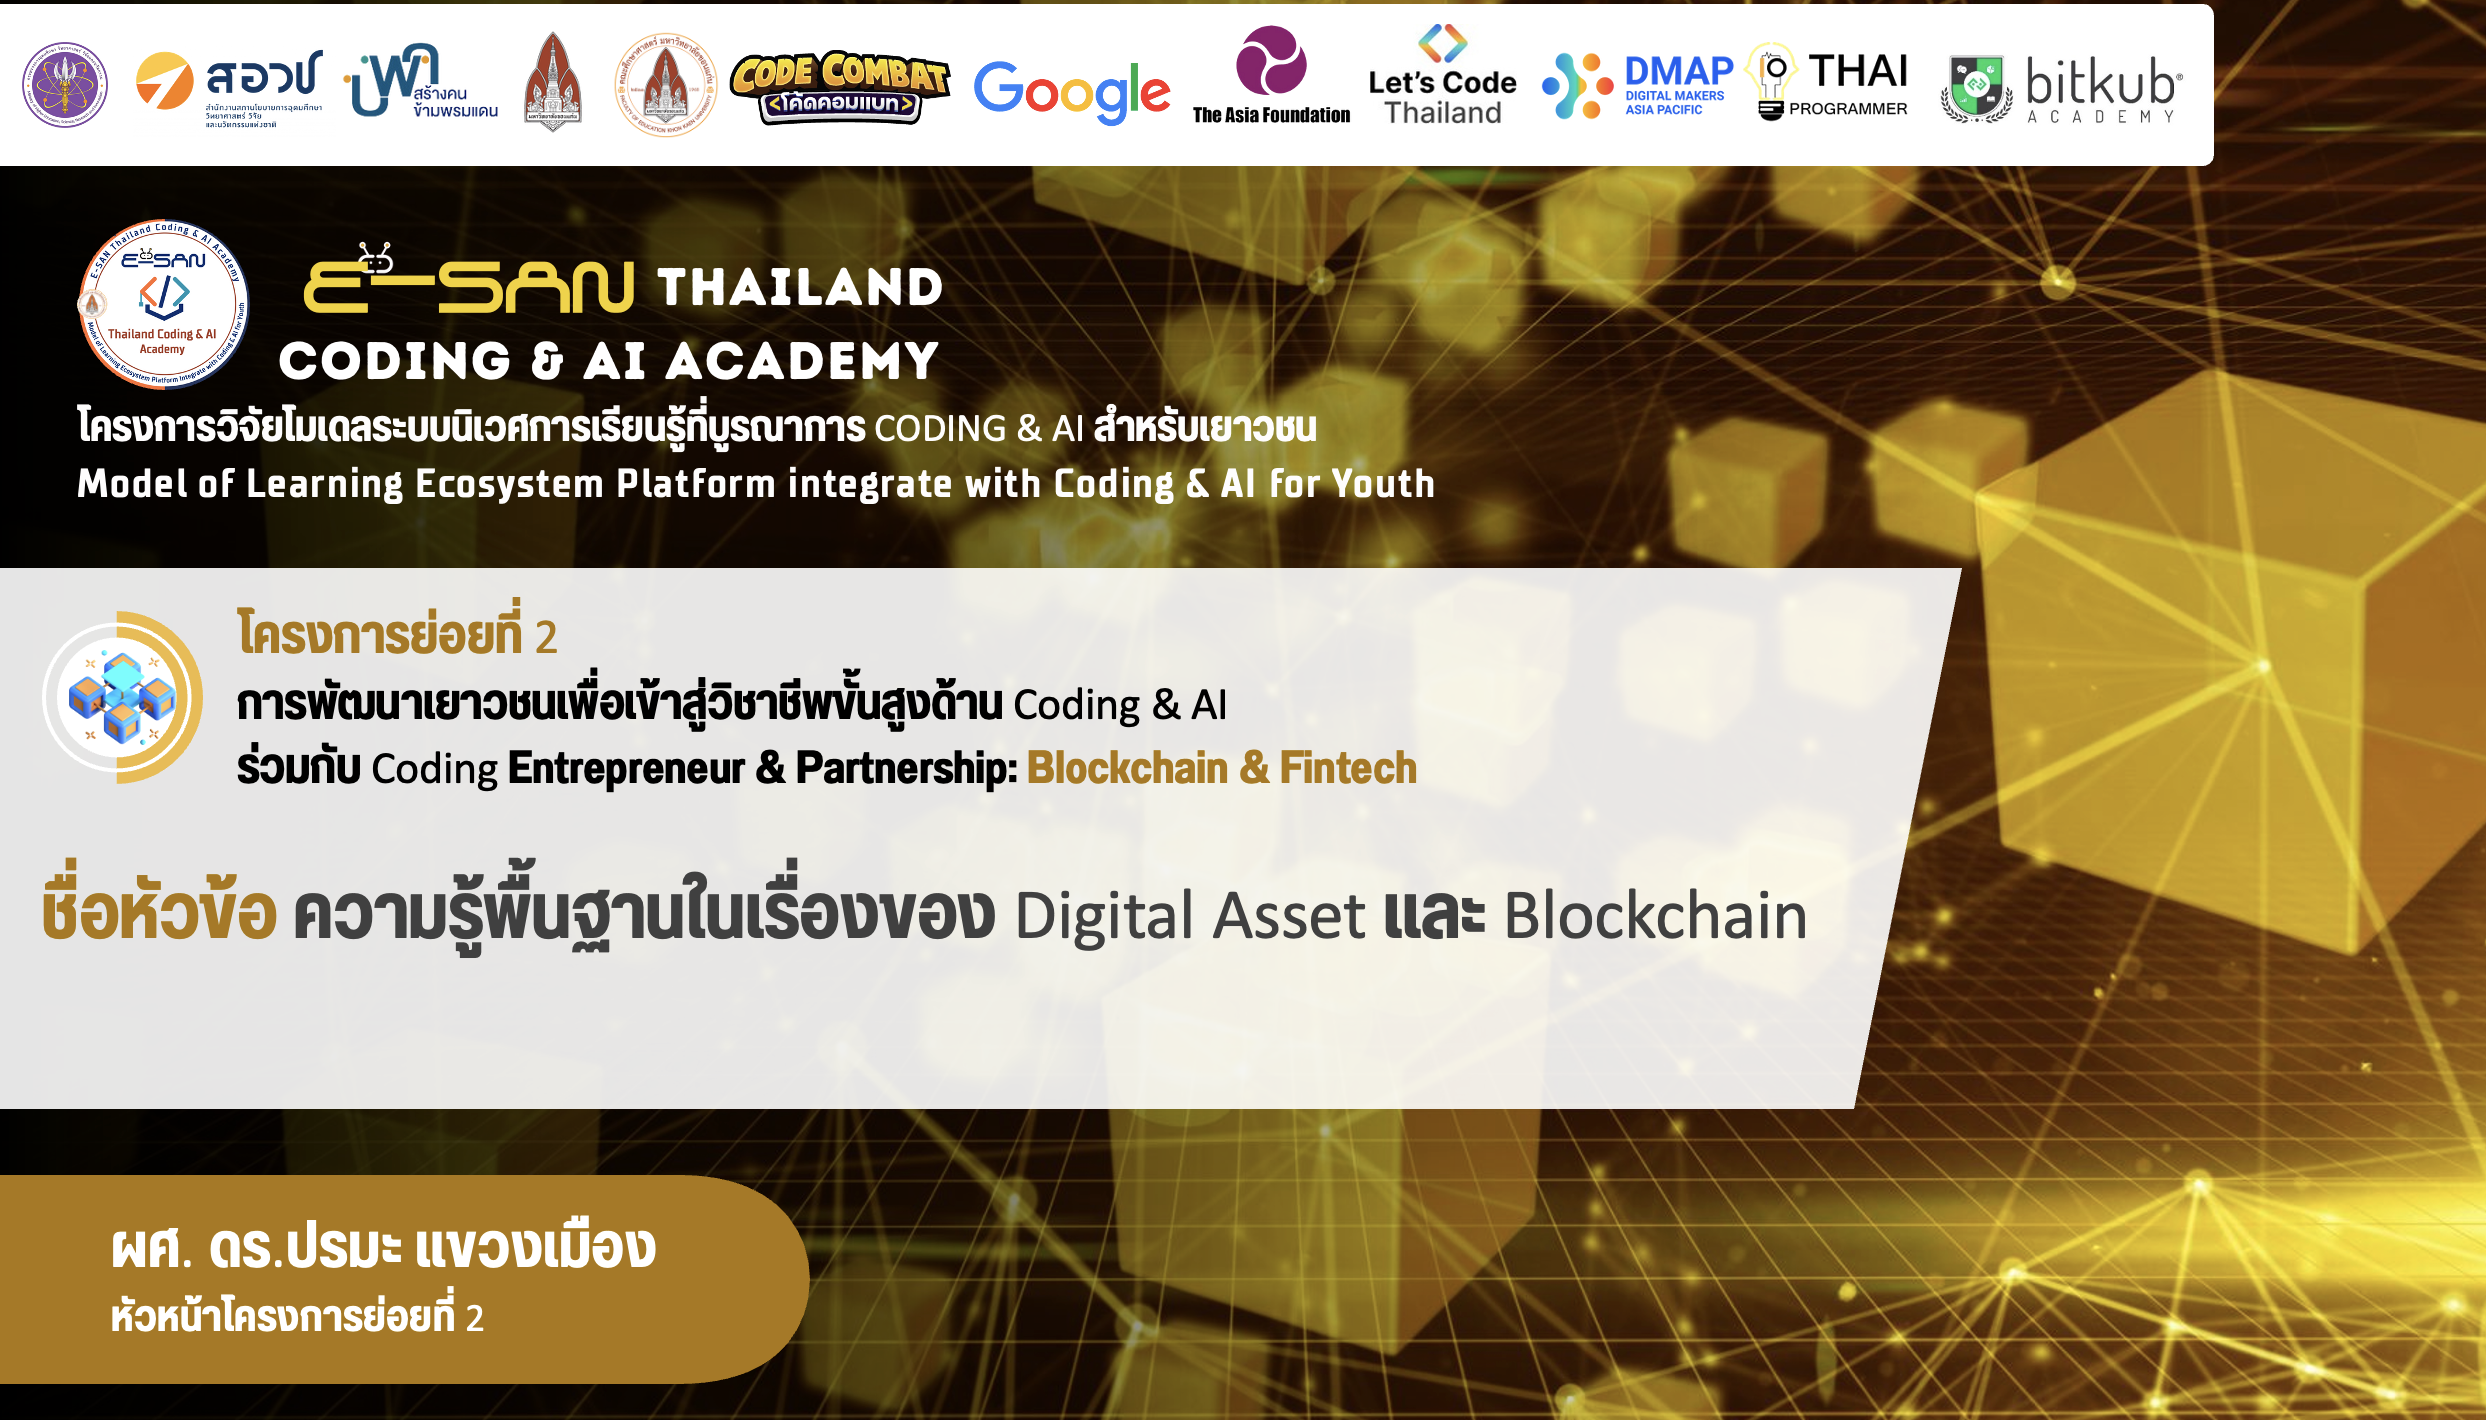 Unit 1: Digital Asset and Blockchain